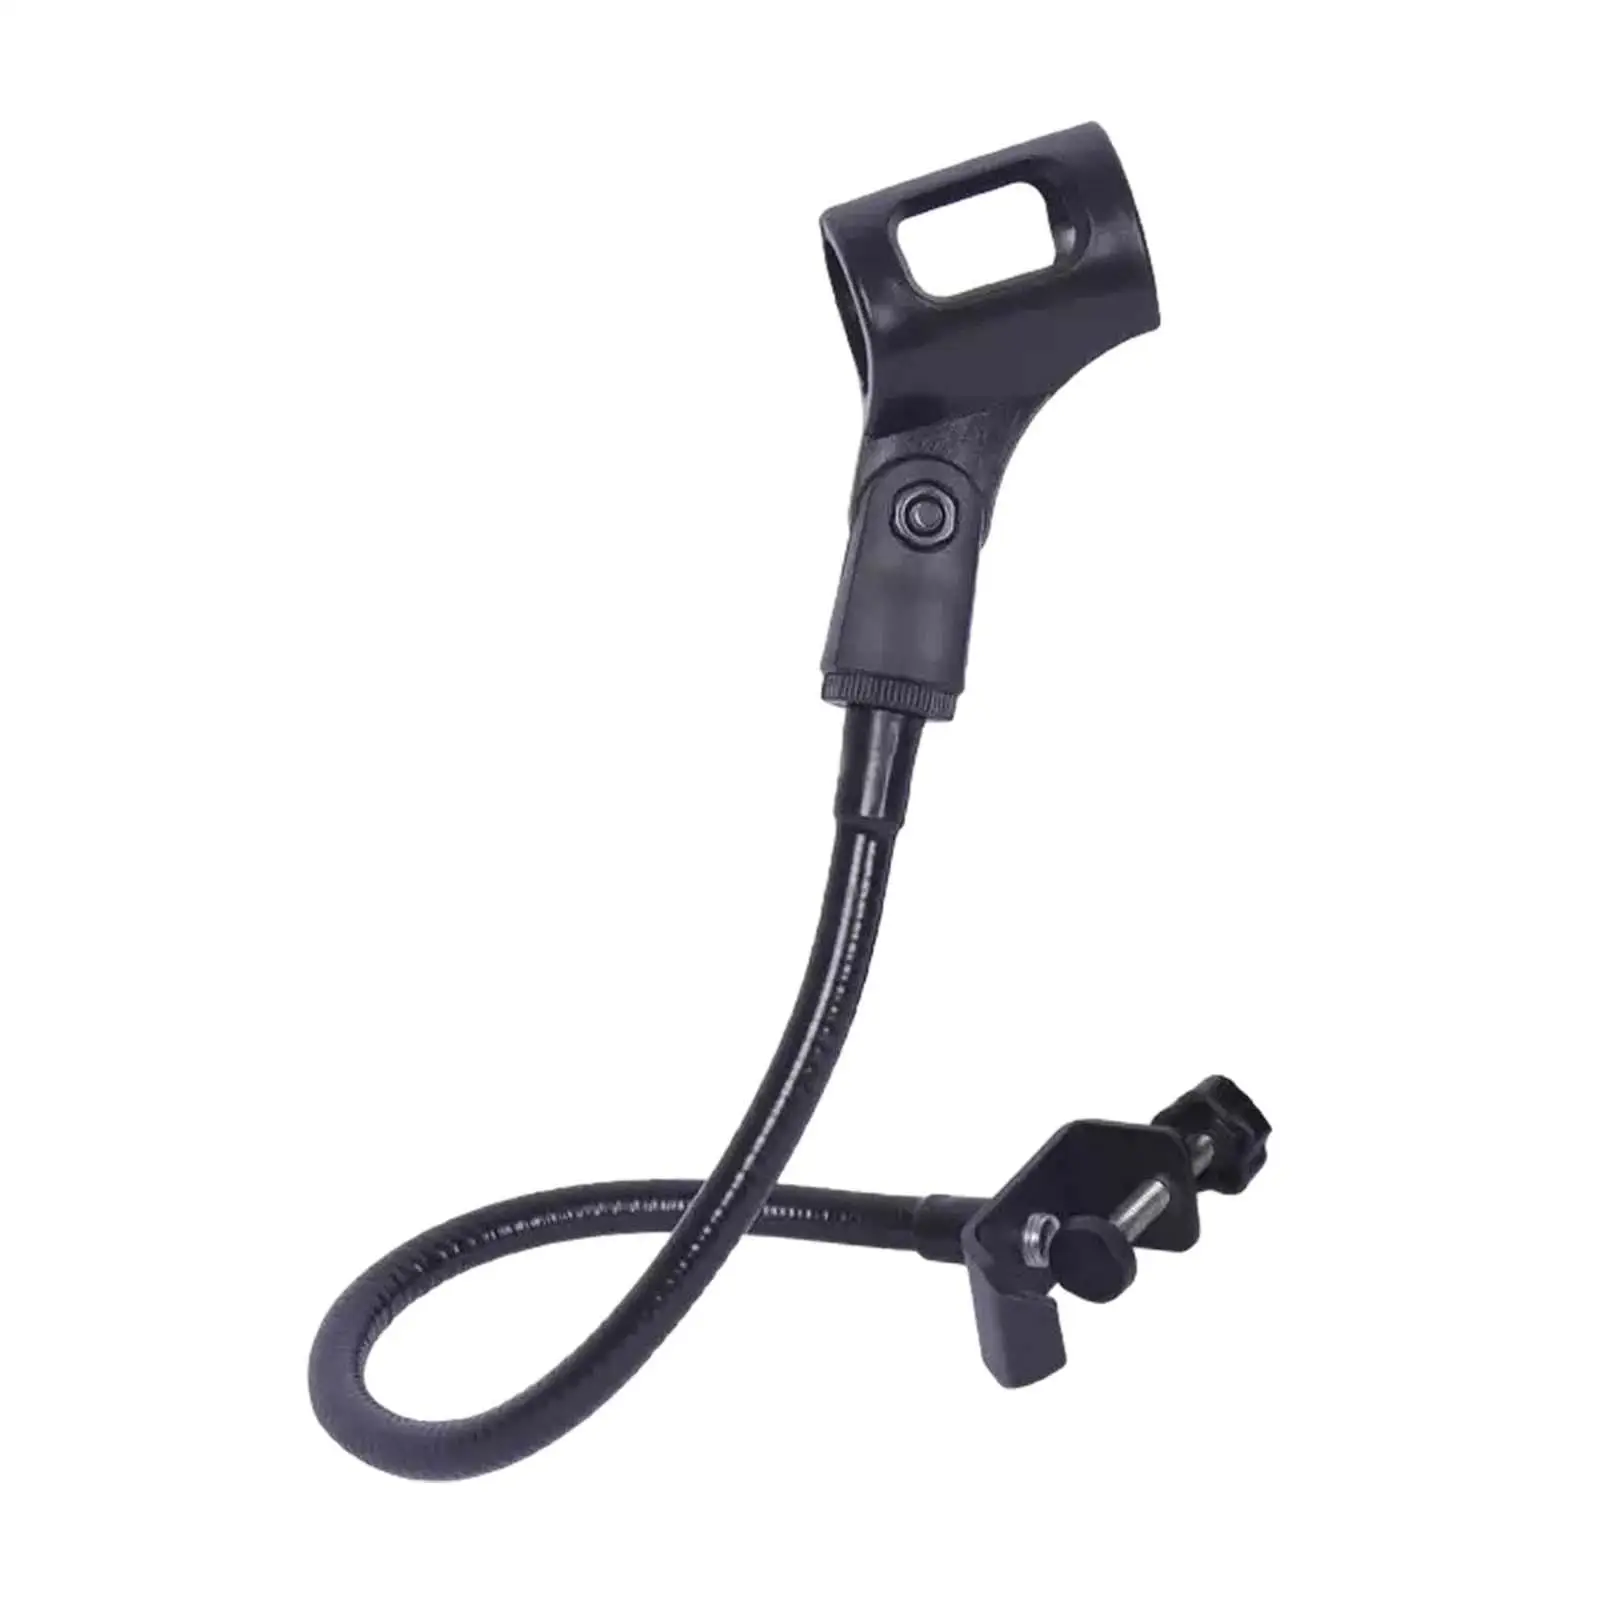 Mic Stands Holder 360° Adjustable Portable Bracket for Meeting Singing TV Stations Radio Broadcasting Studio Equipment